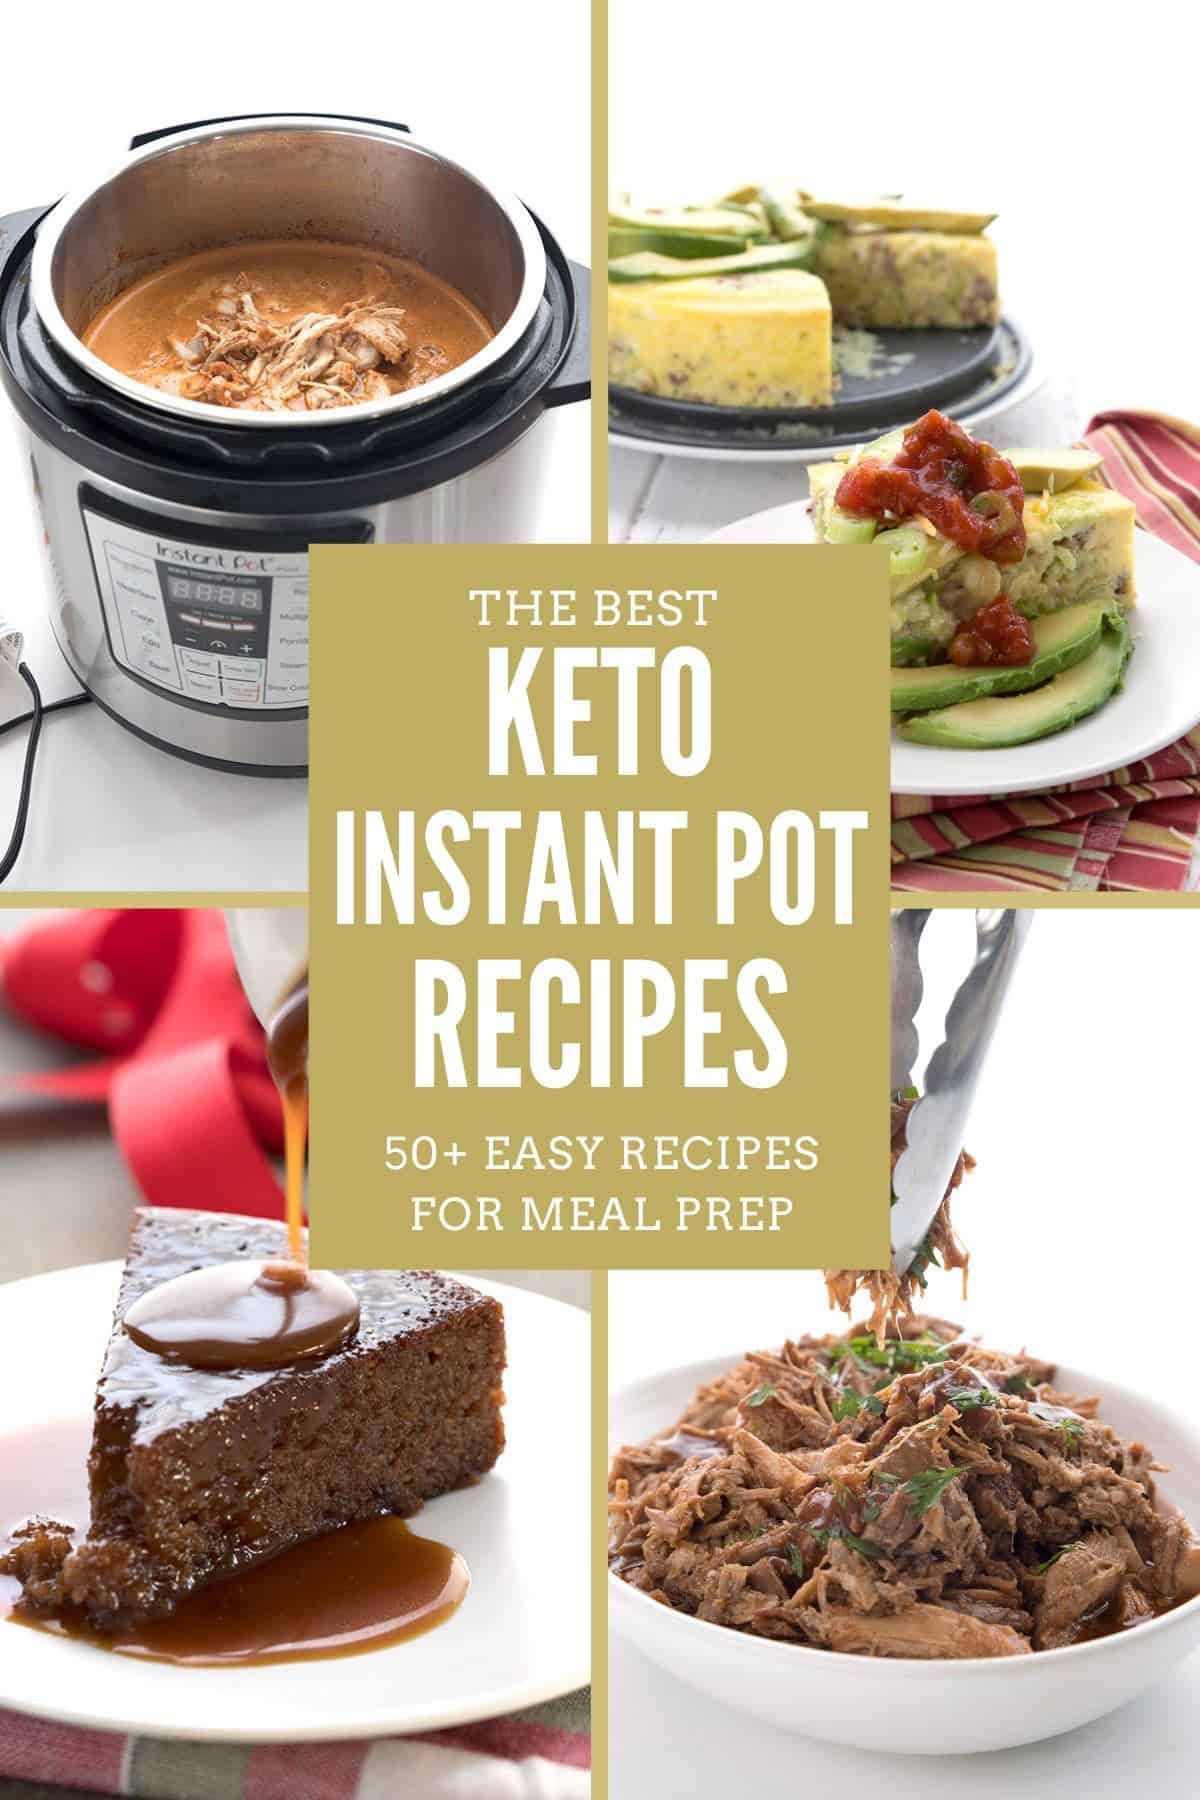 https://alldayidreamaboutfood.com/wp-content/uploads/2021/10/Keto-Instant-Pot-Recipes.jpg